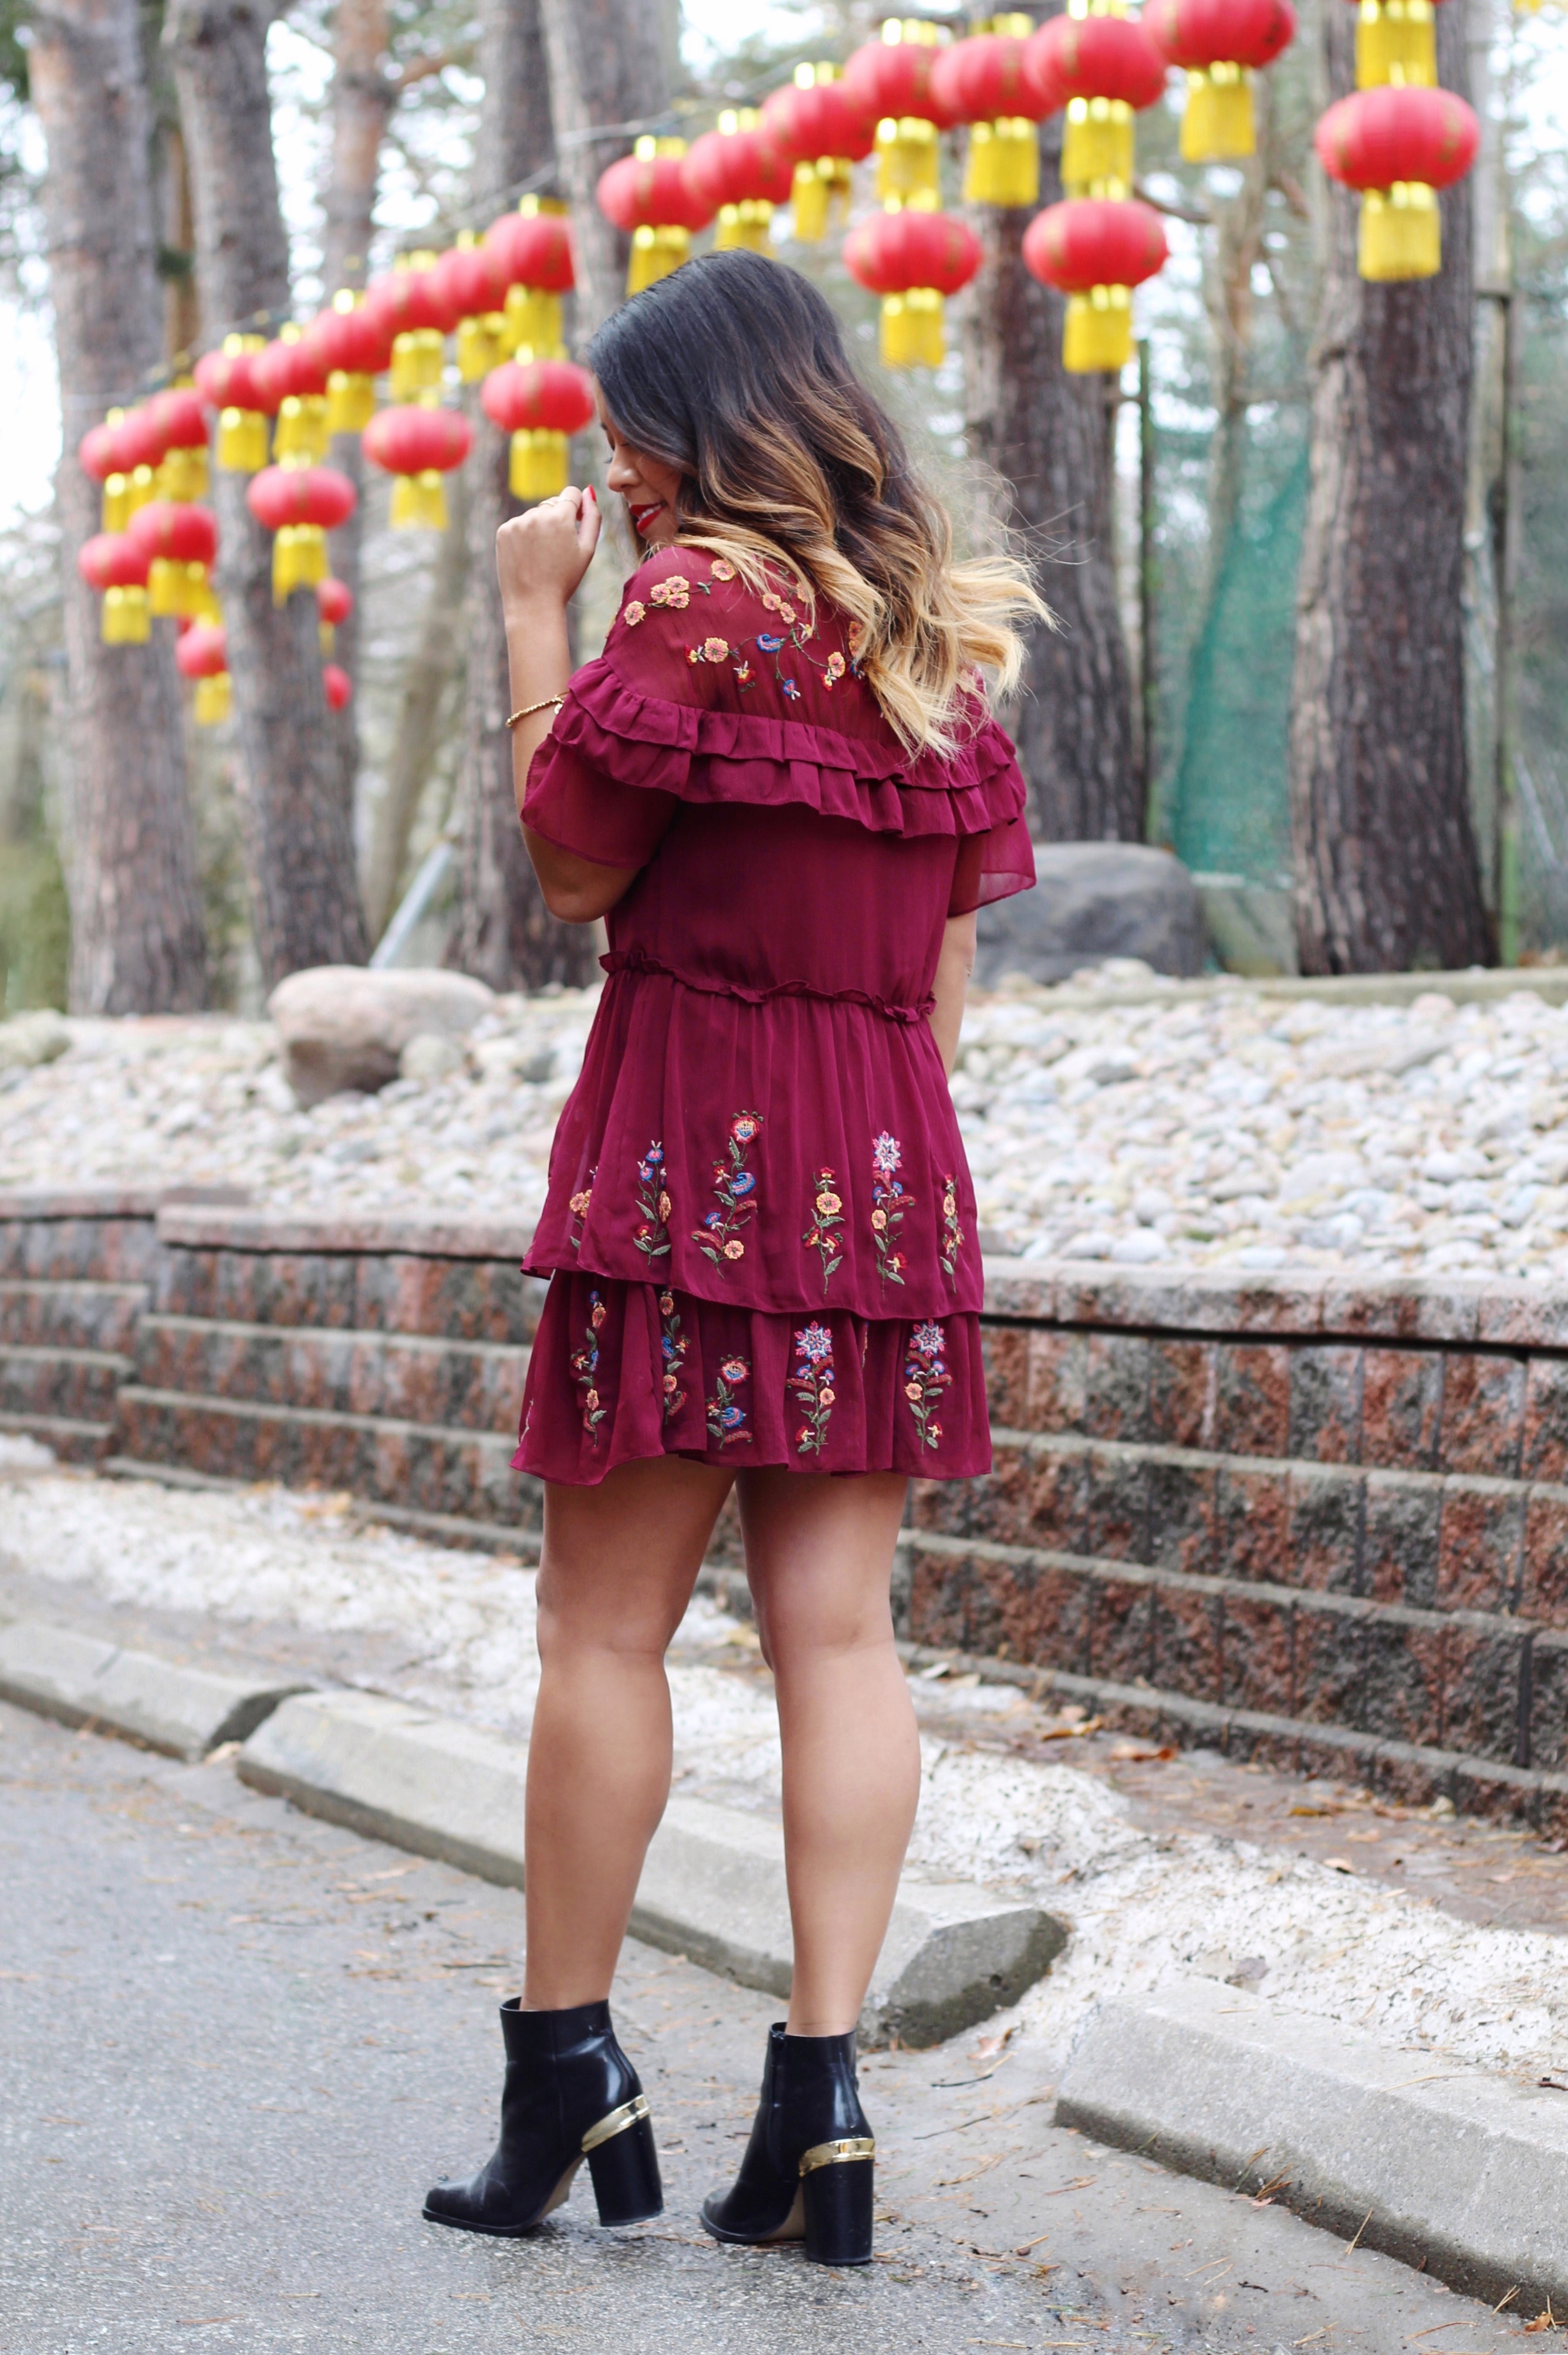 Celebrating Lunar New Year: Traditions, Outfits, & Gift Ideas – Angela Chau XO2672 x 4013